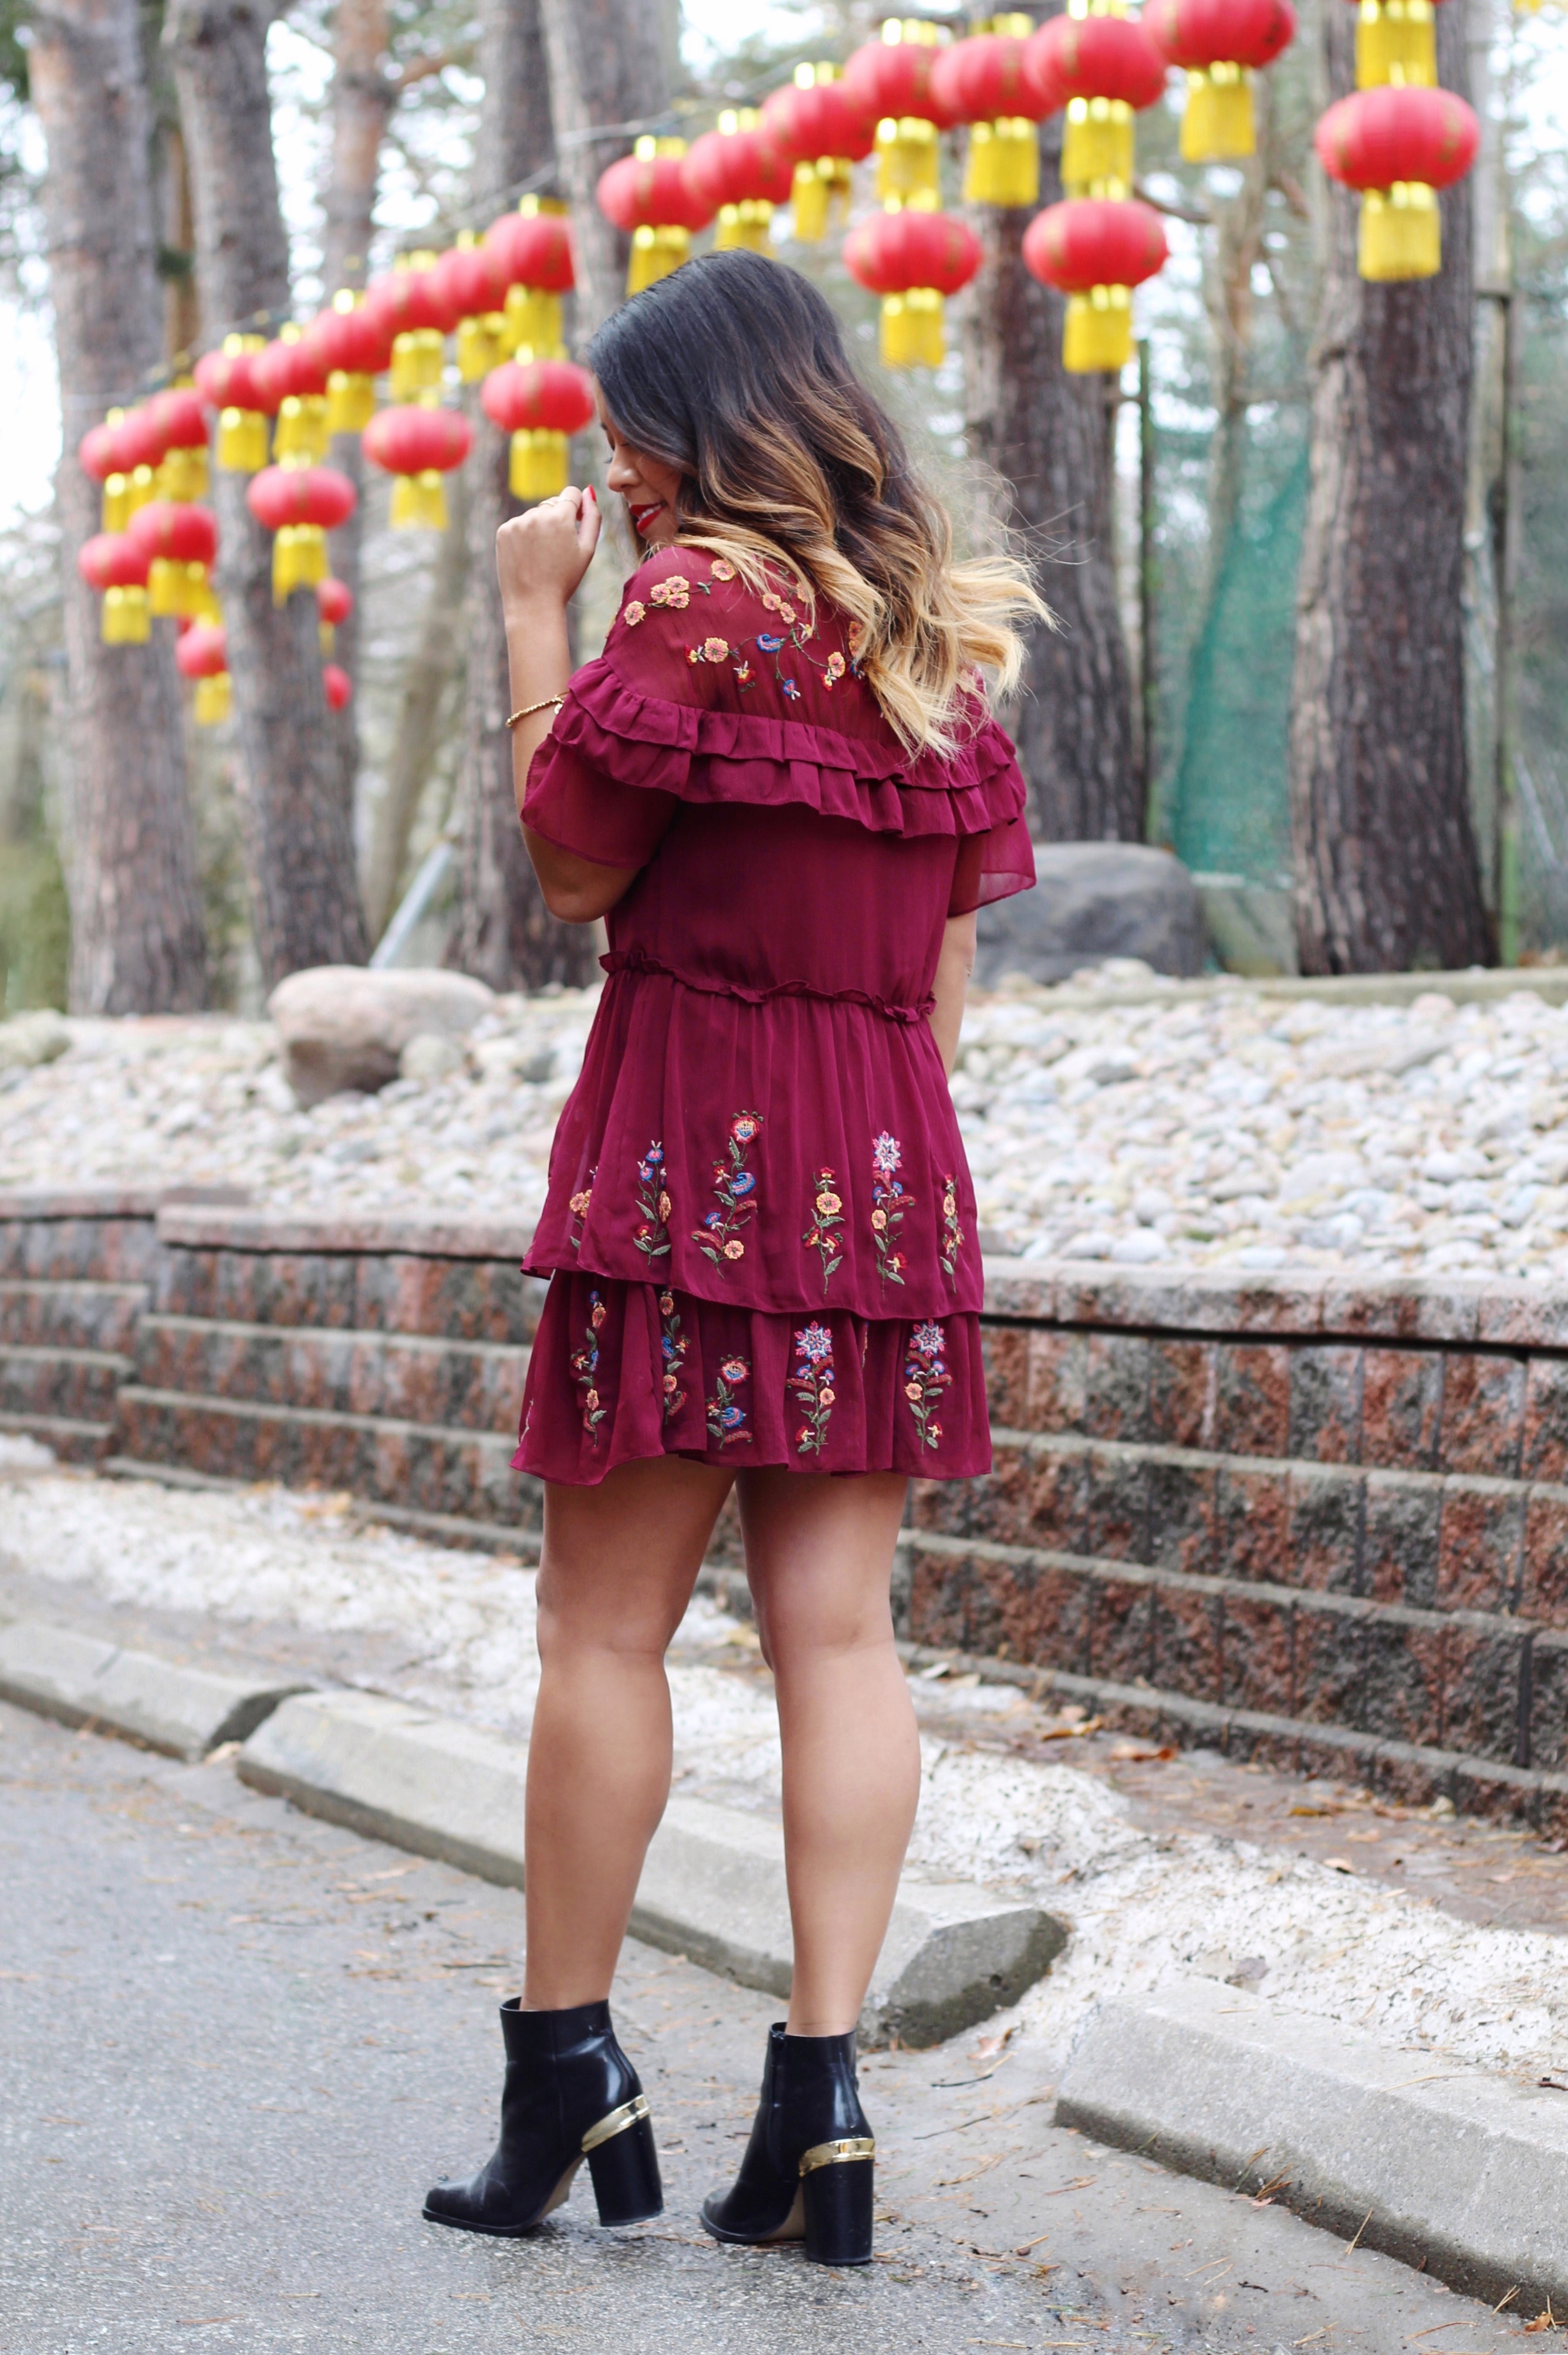 Celebrating Lunar New Year: Traditions, Outfits, & Gift Ideas – Angela Chau XO2672 x 4013